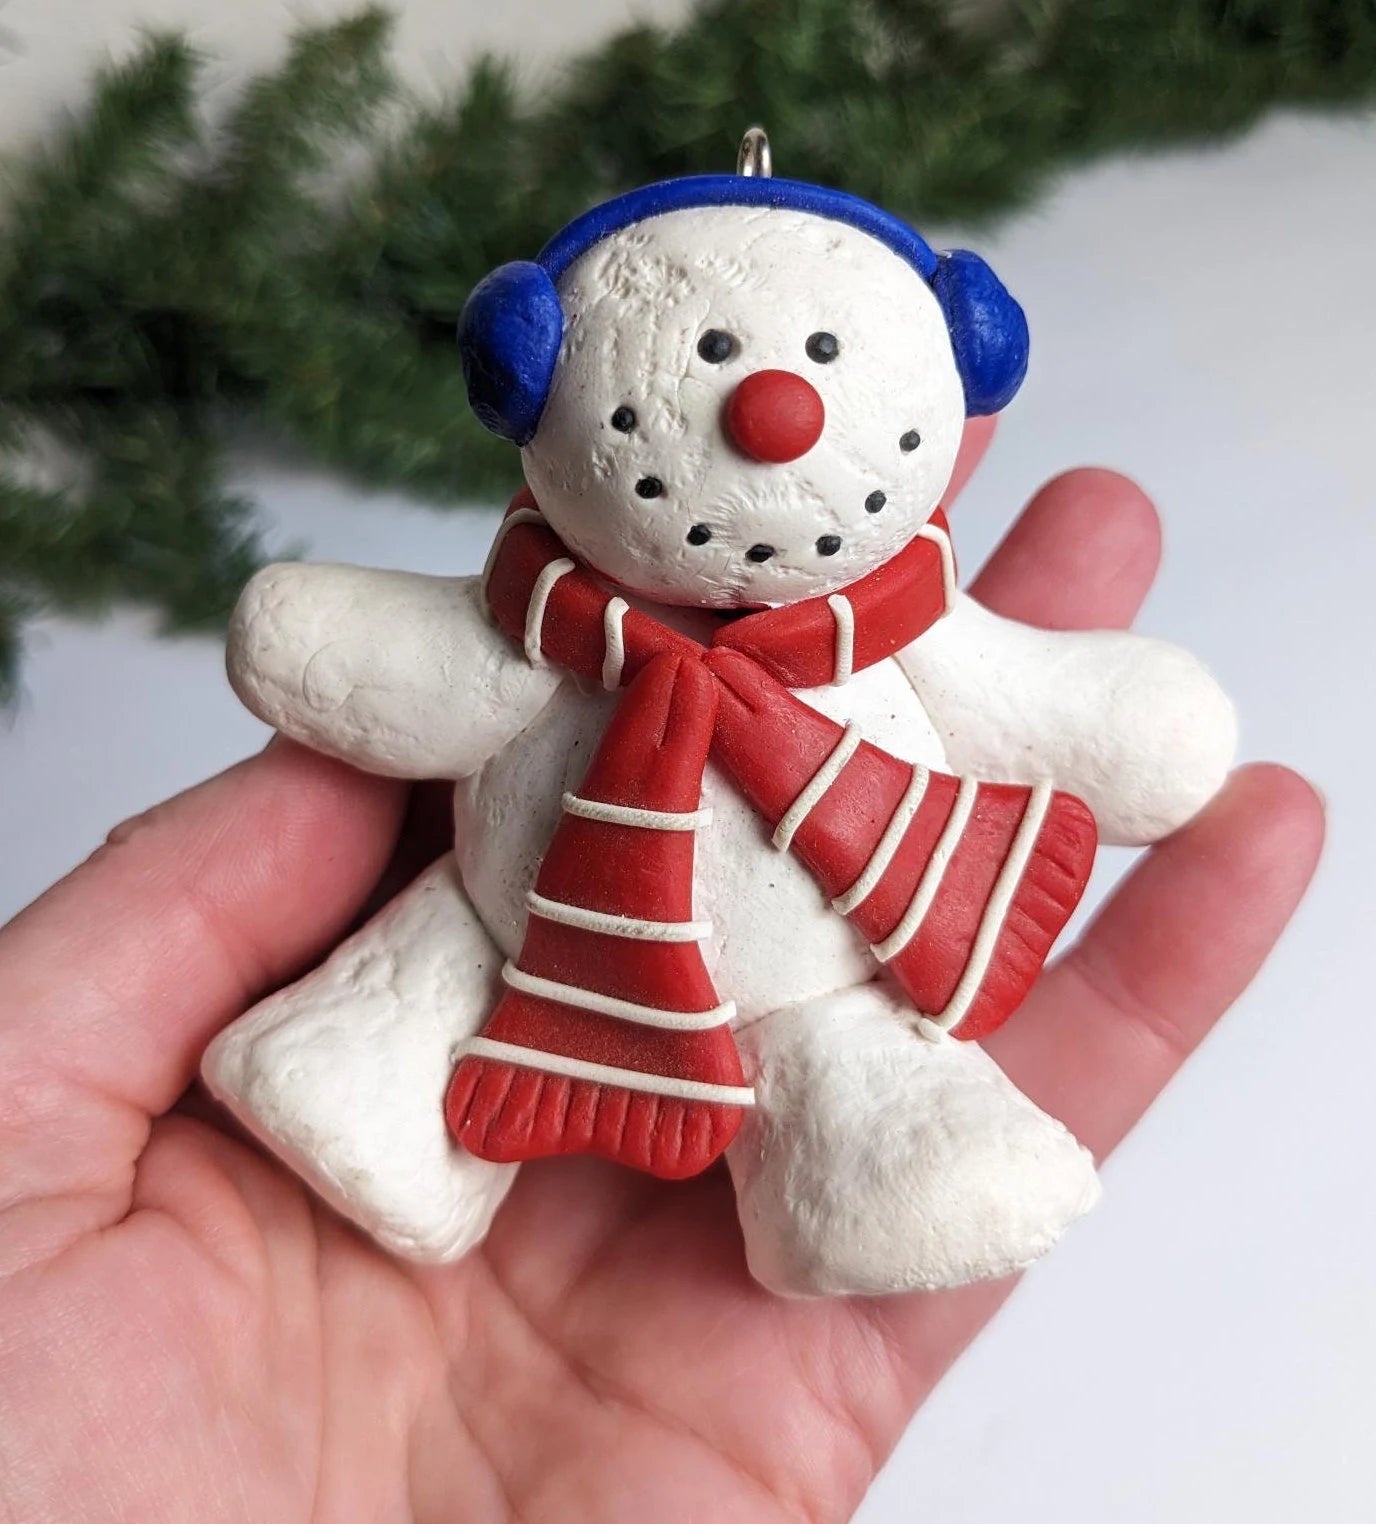 Snow Man Making Snow Angels Christmas Ornament